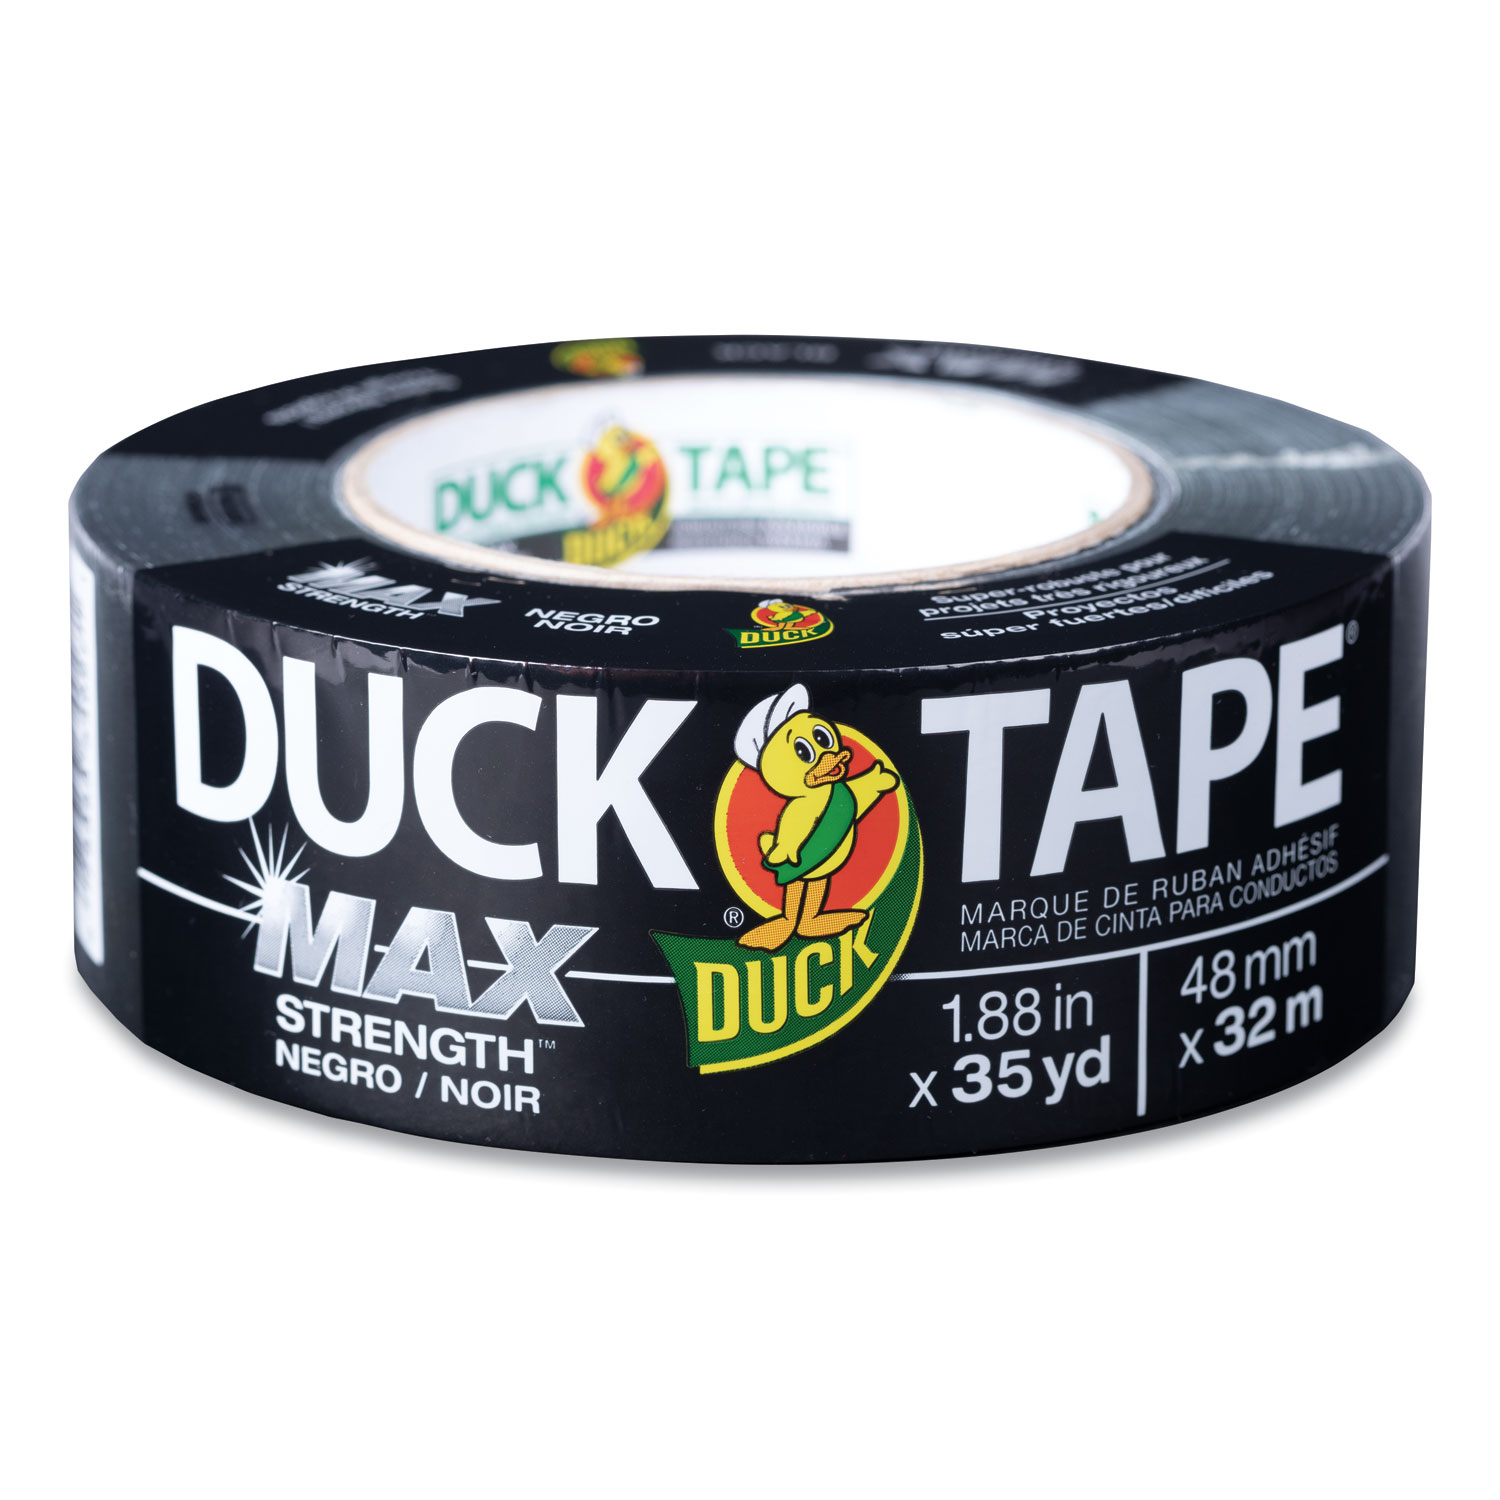  Duck 240867 MAX Duct Tape, 3 Core, 1.88 x 35 yds, Black (DUC240867) 